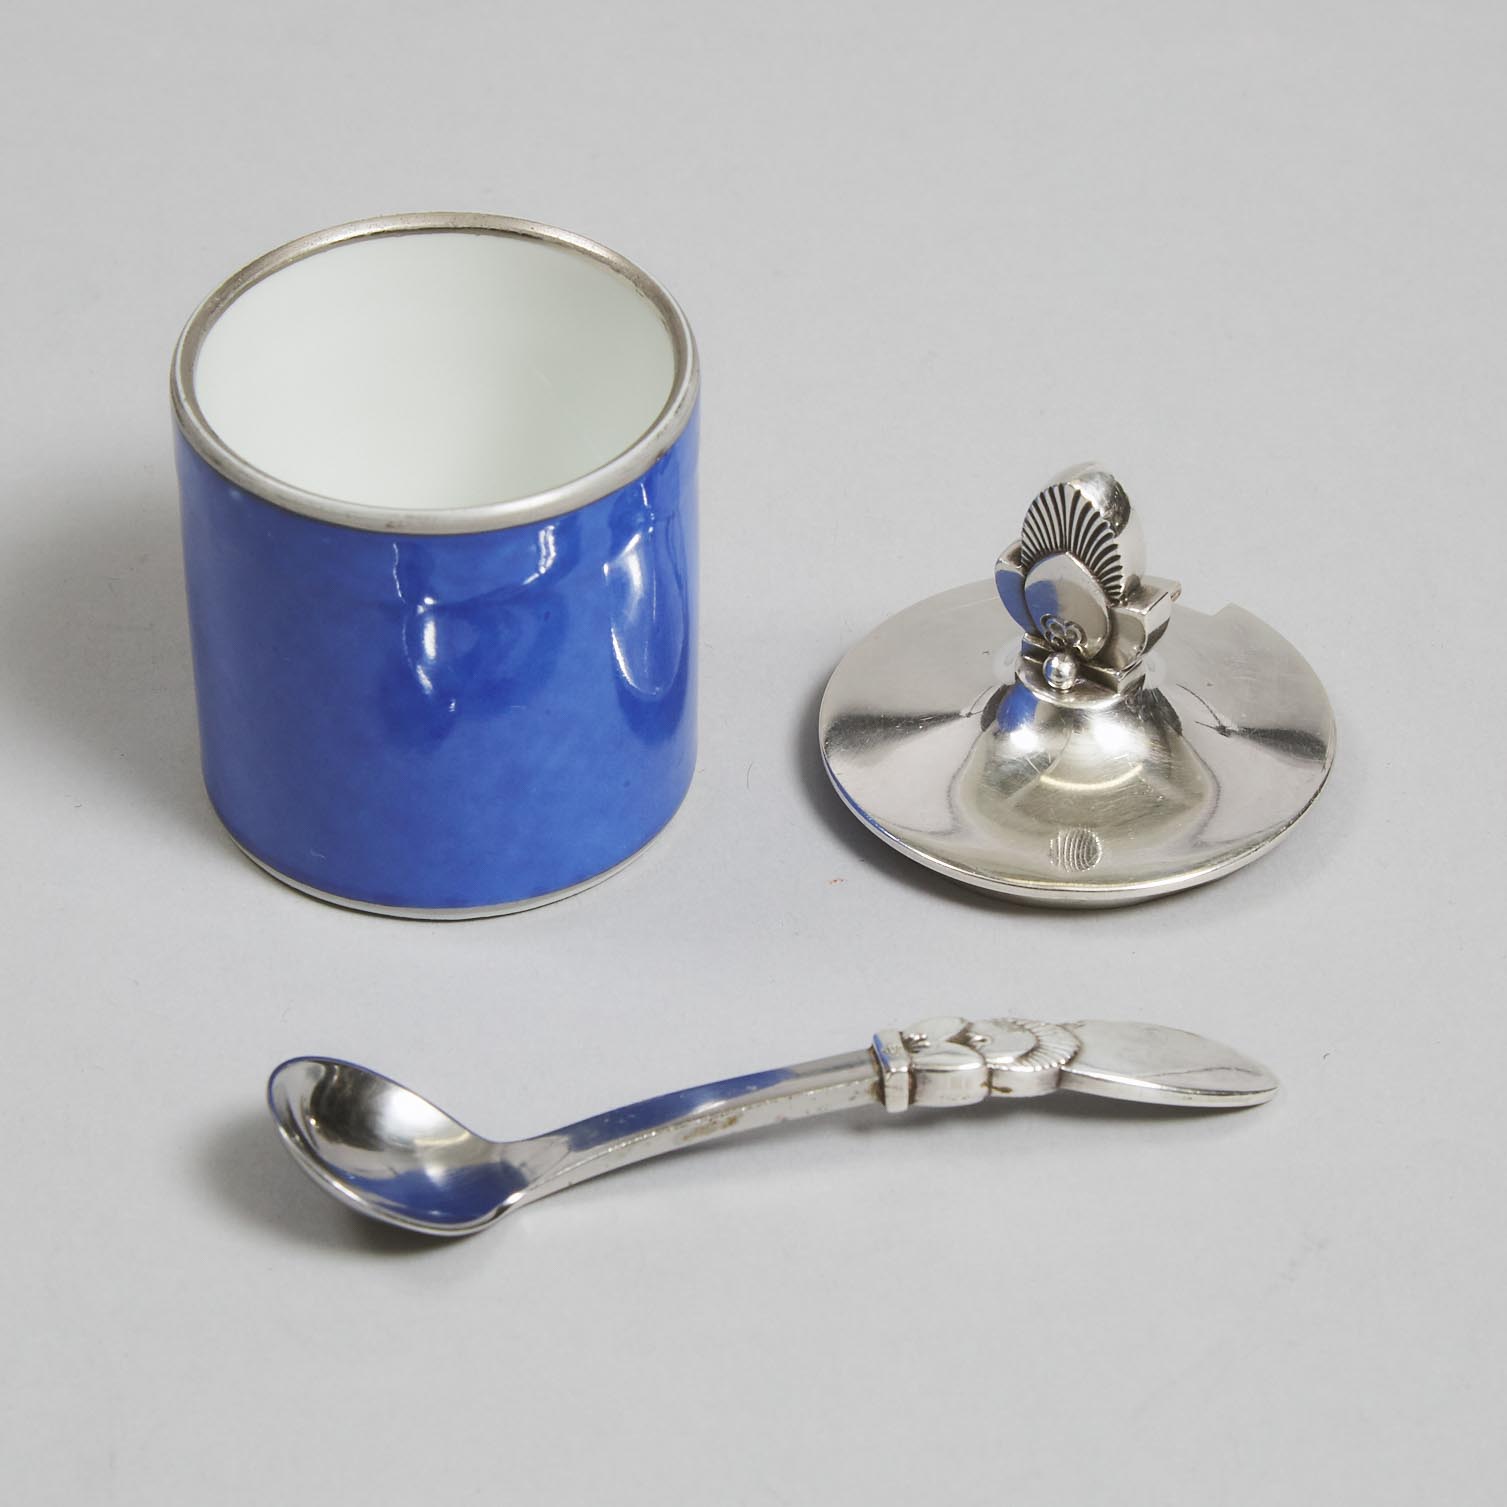 Danish Silver ‘Cactus’ Pattern Covered Royal Copenhagen Mustard Pot and Spoon, #815C, Gundorph Albertus for Georg Jensen, Copenhagen, 1933-44